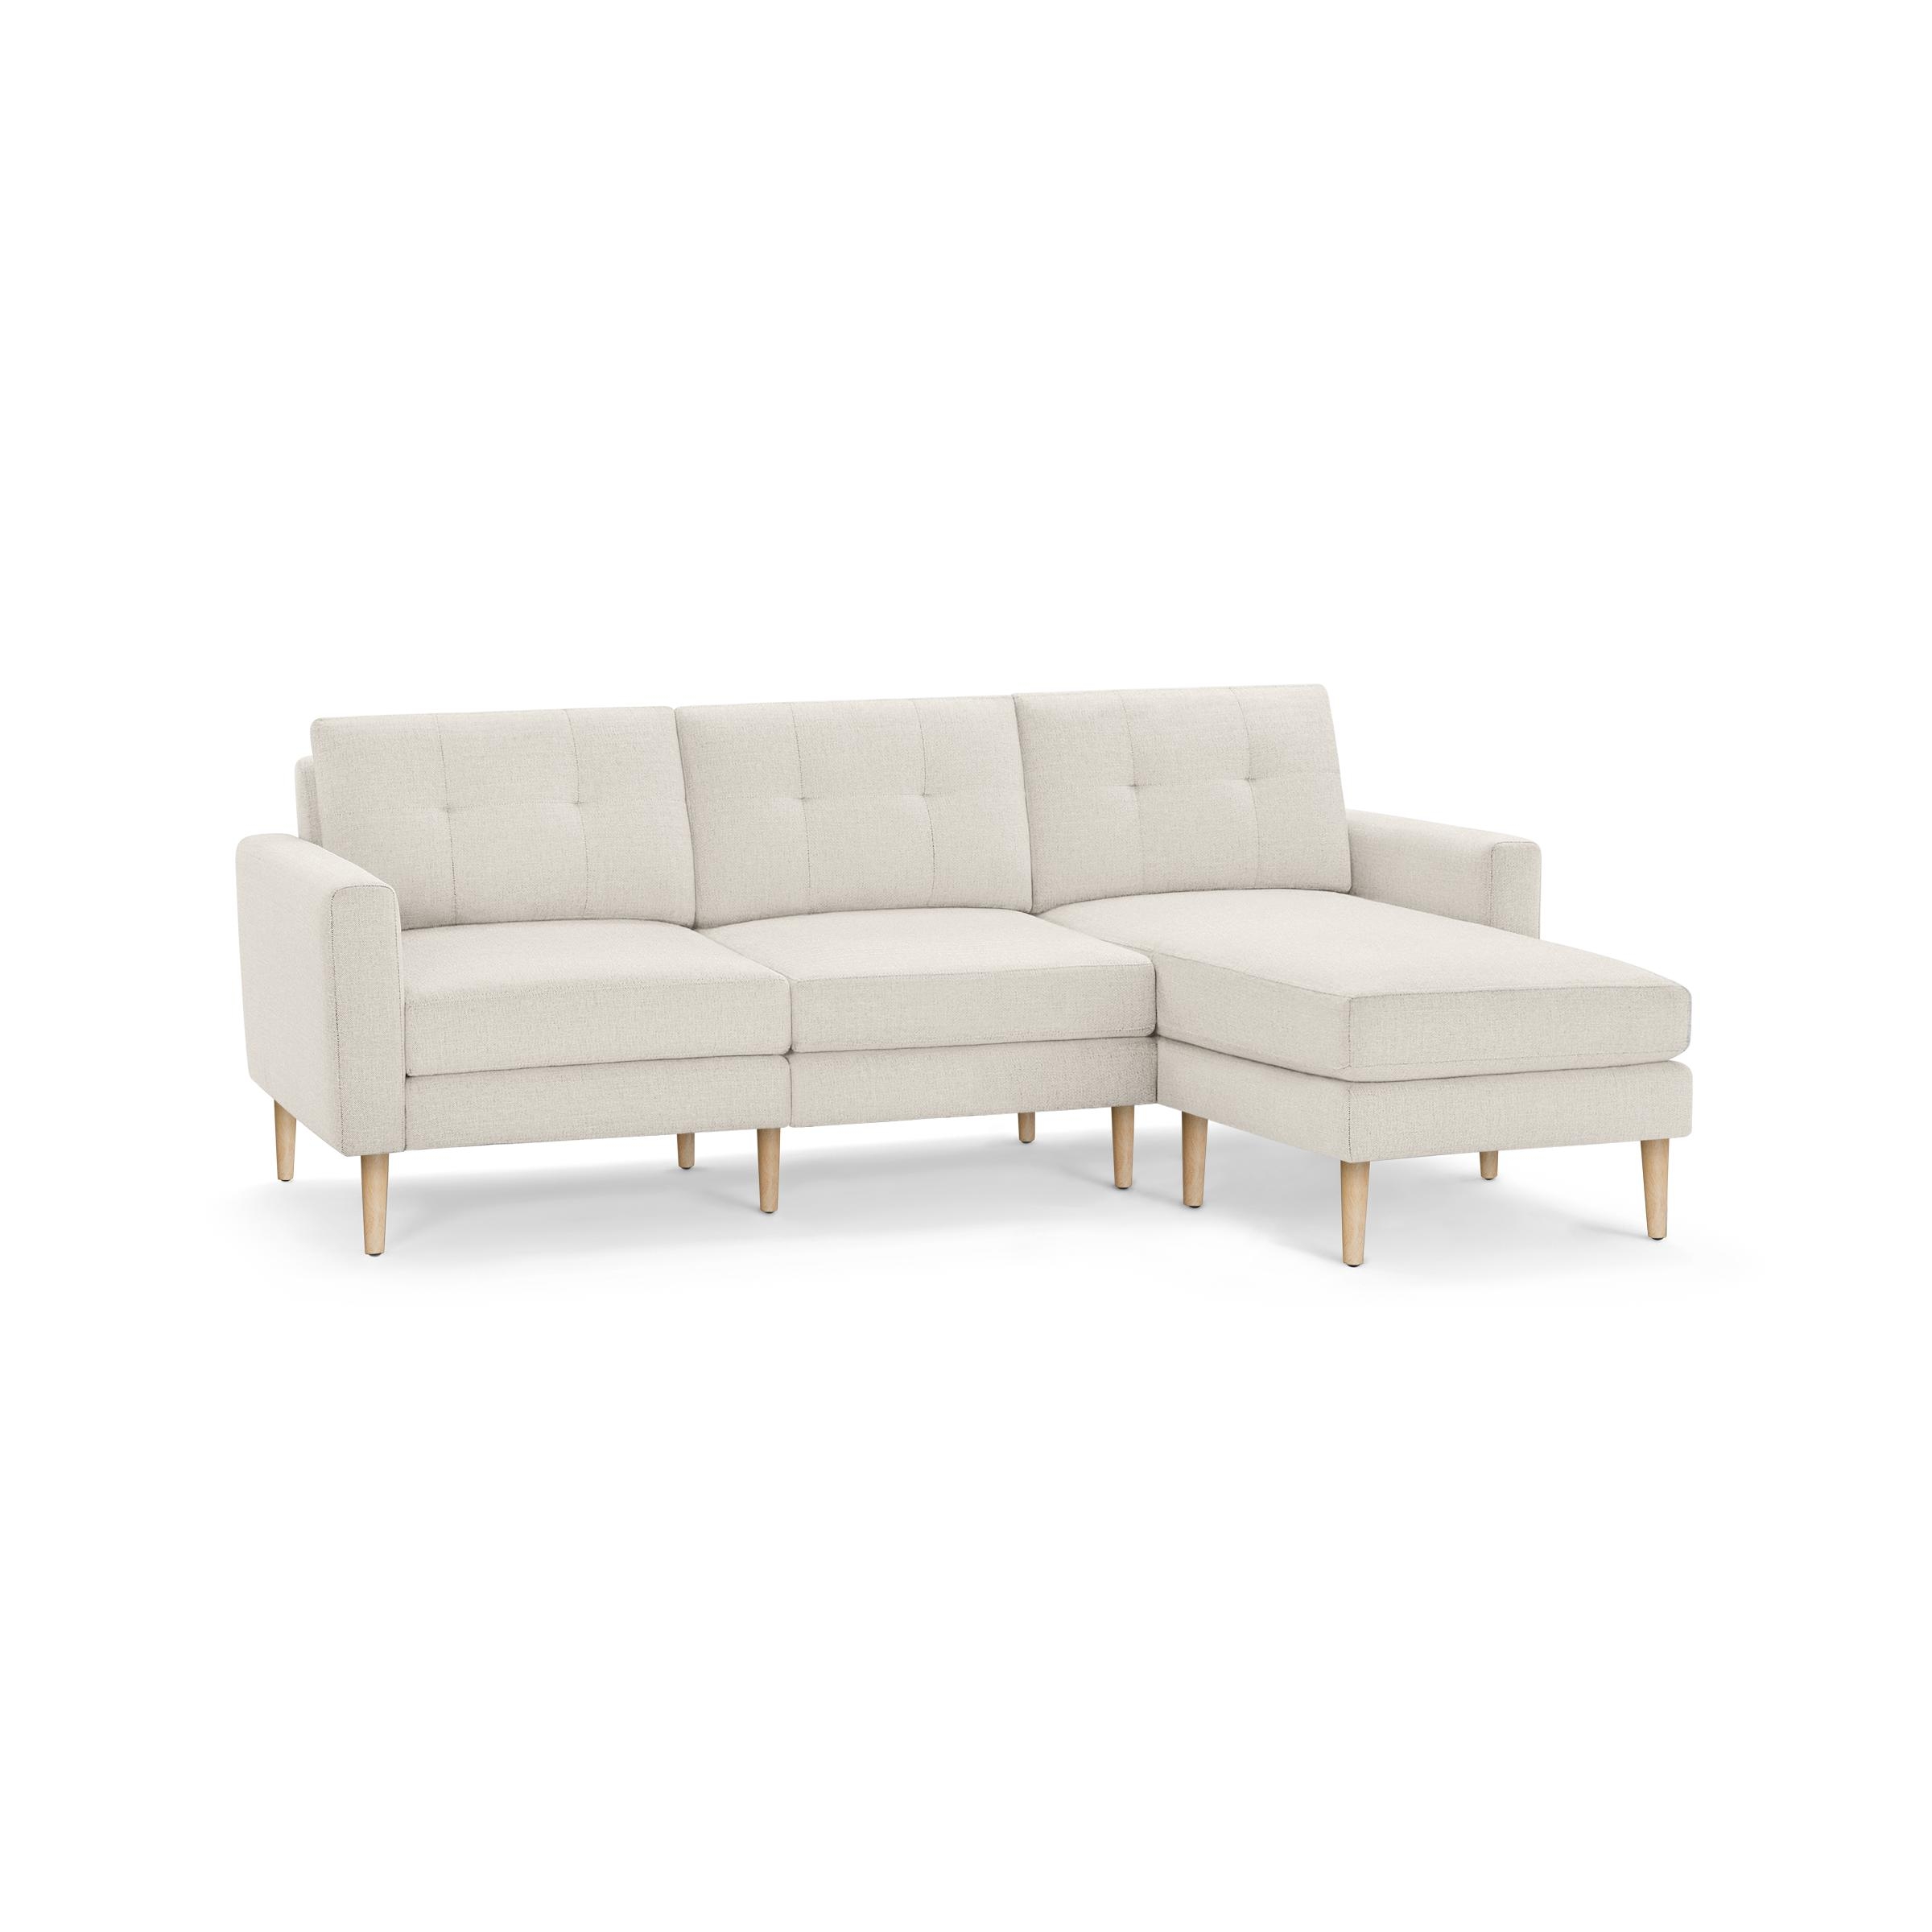 Nomad Sofa Sectional in Ivory, Oak Legs, Leg Finish: OakLegs - Image 0